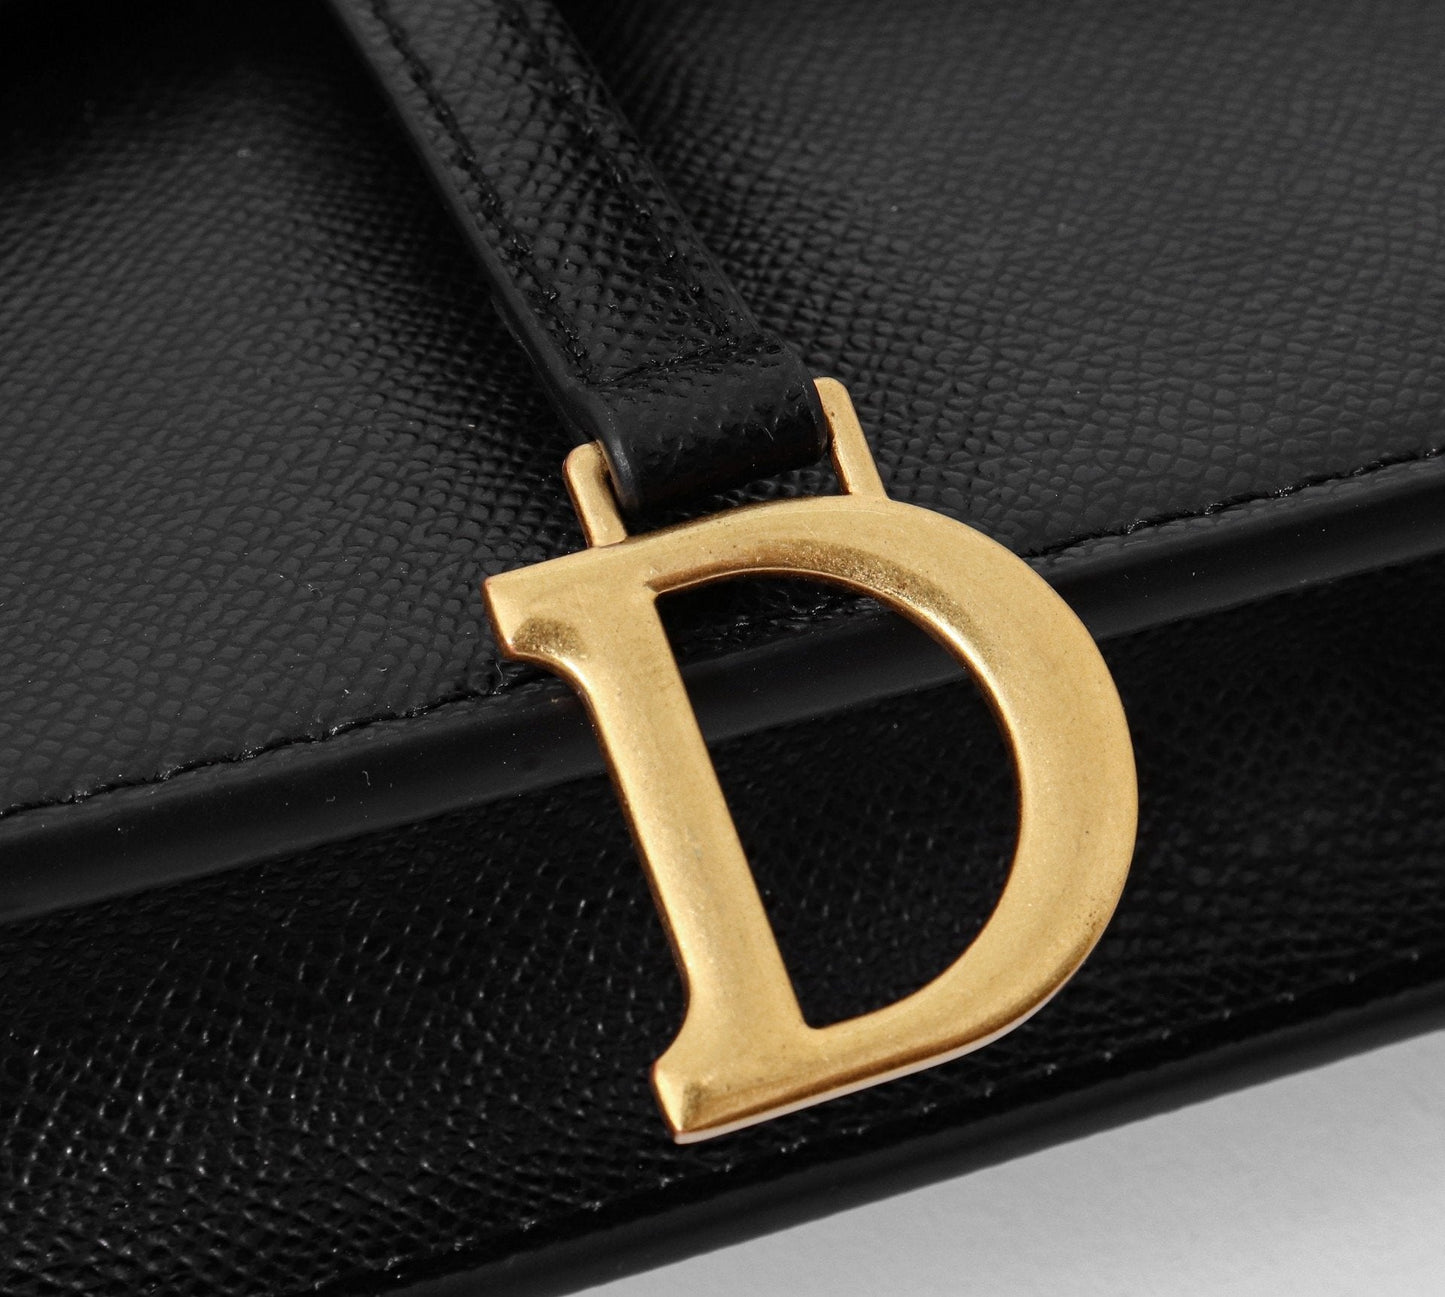 MO - Top Quality Bags Christian Dior 147